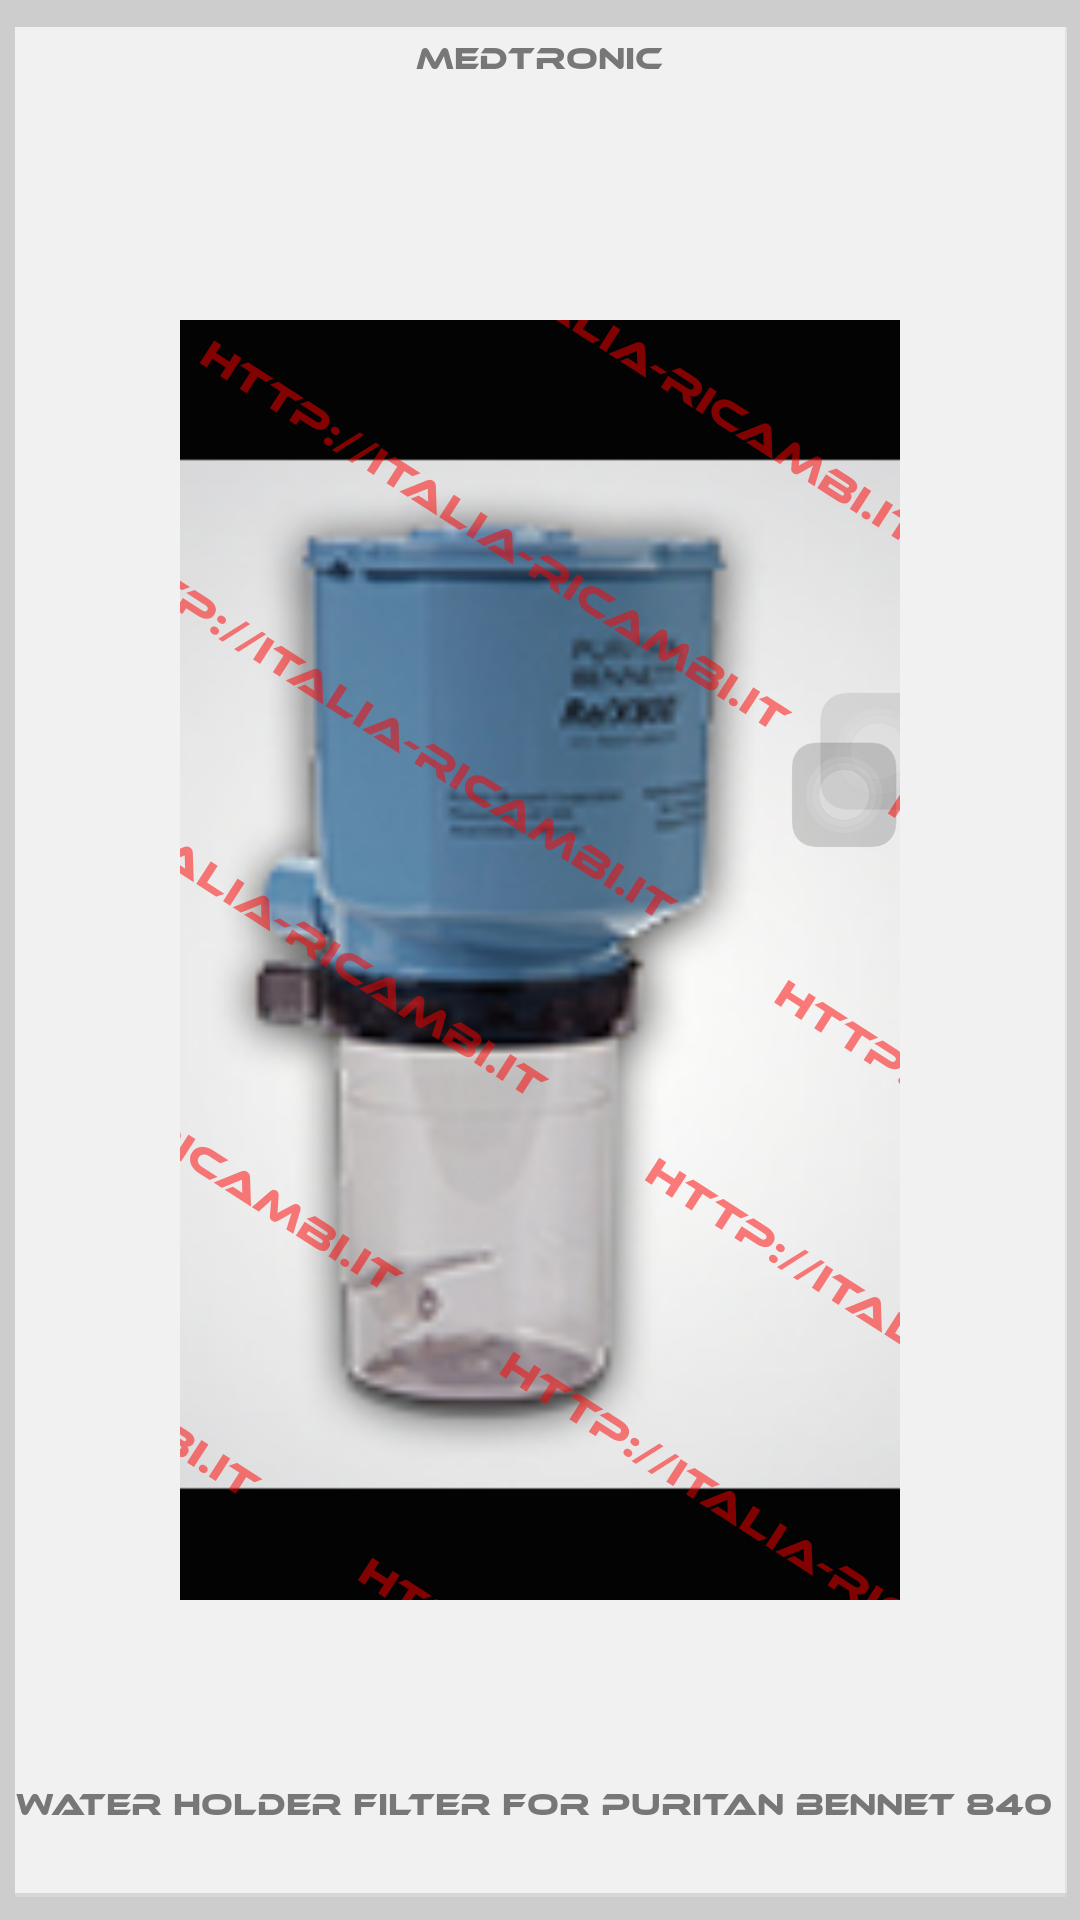 Water Holder Filter For Puritan Bennet 840 -0